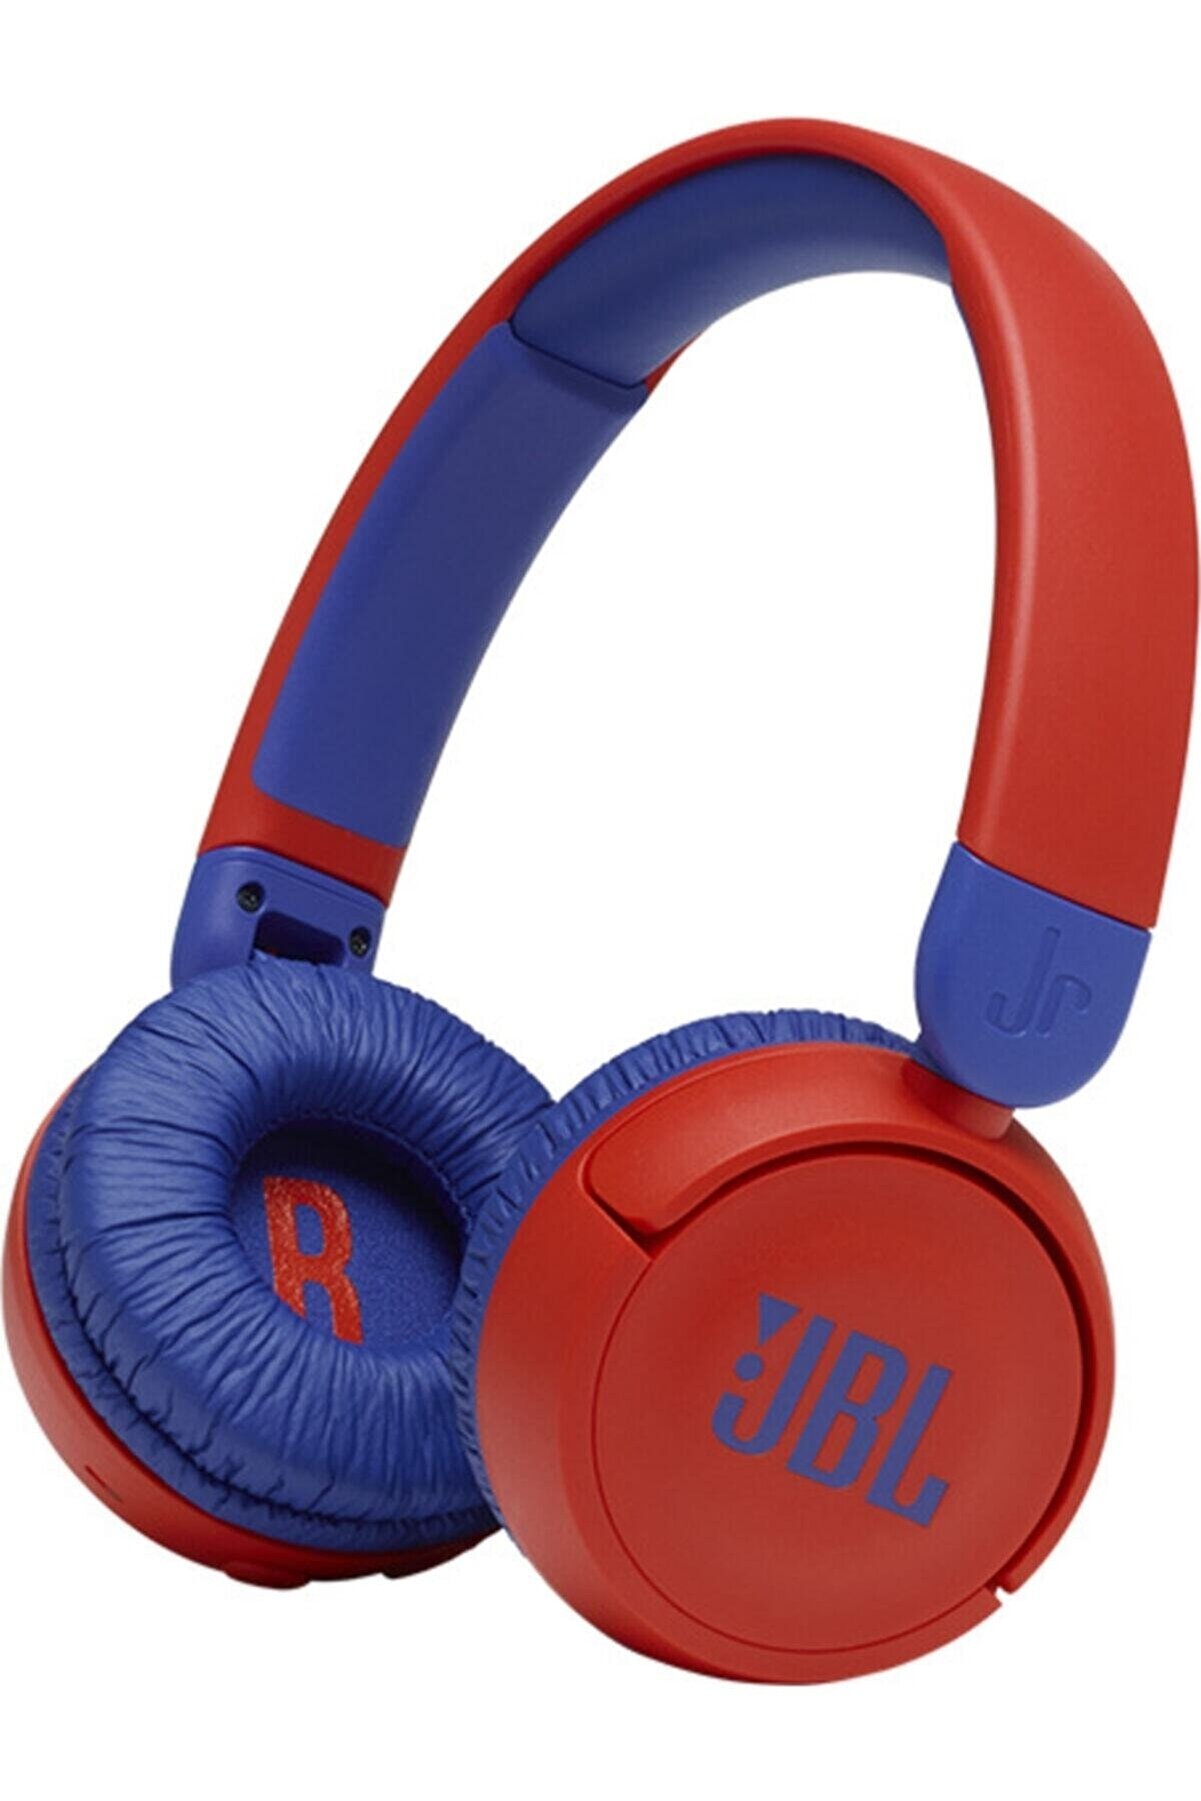 JBL Jr310bt Kablosuz Kulak Üstü Çocuk Kulaklığı – Kırmızı